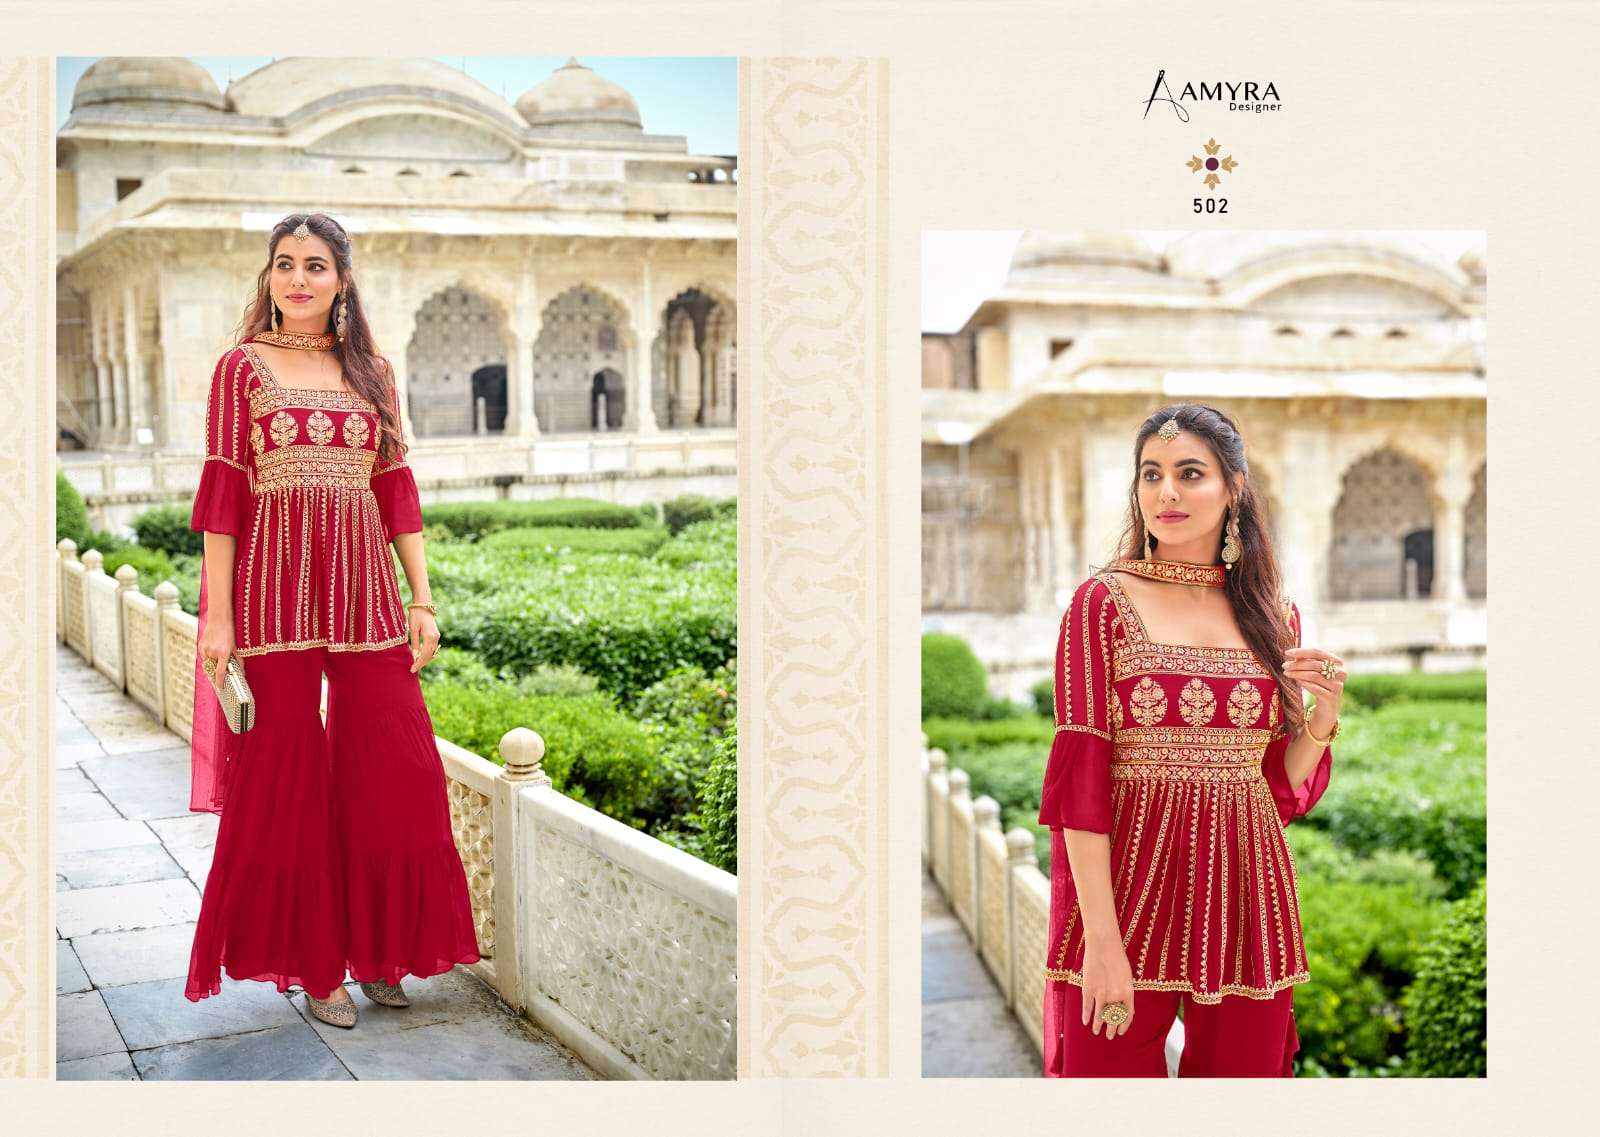 Amyra Florence 501 Catalog Karwa Chauth Special Designer Top Bottom Dupatta Wholesale